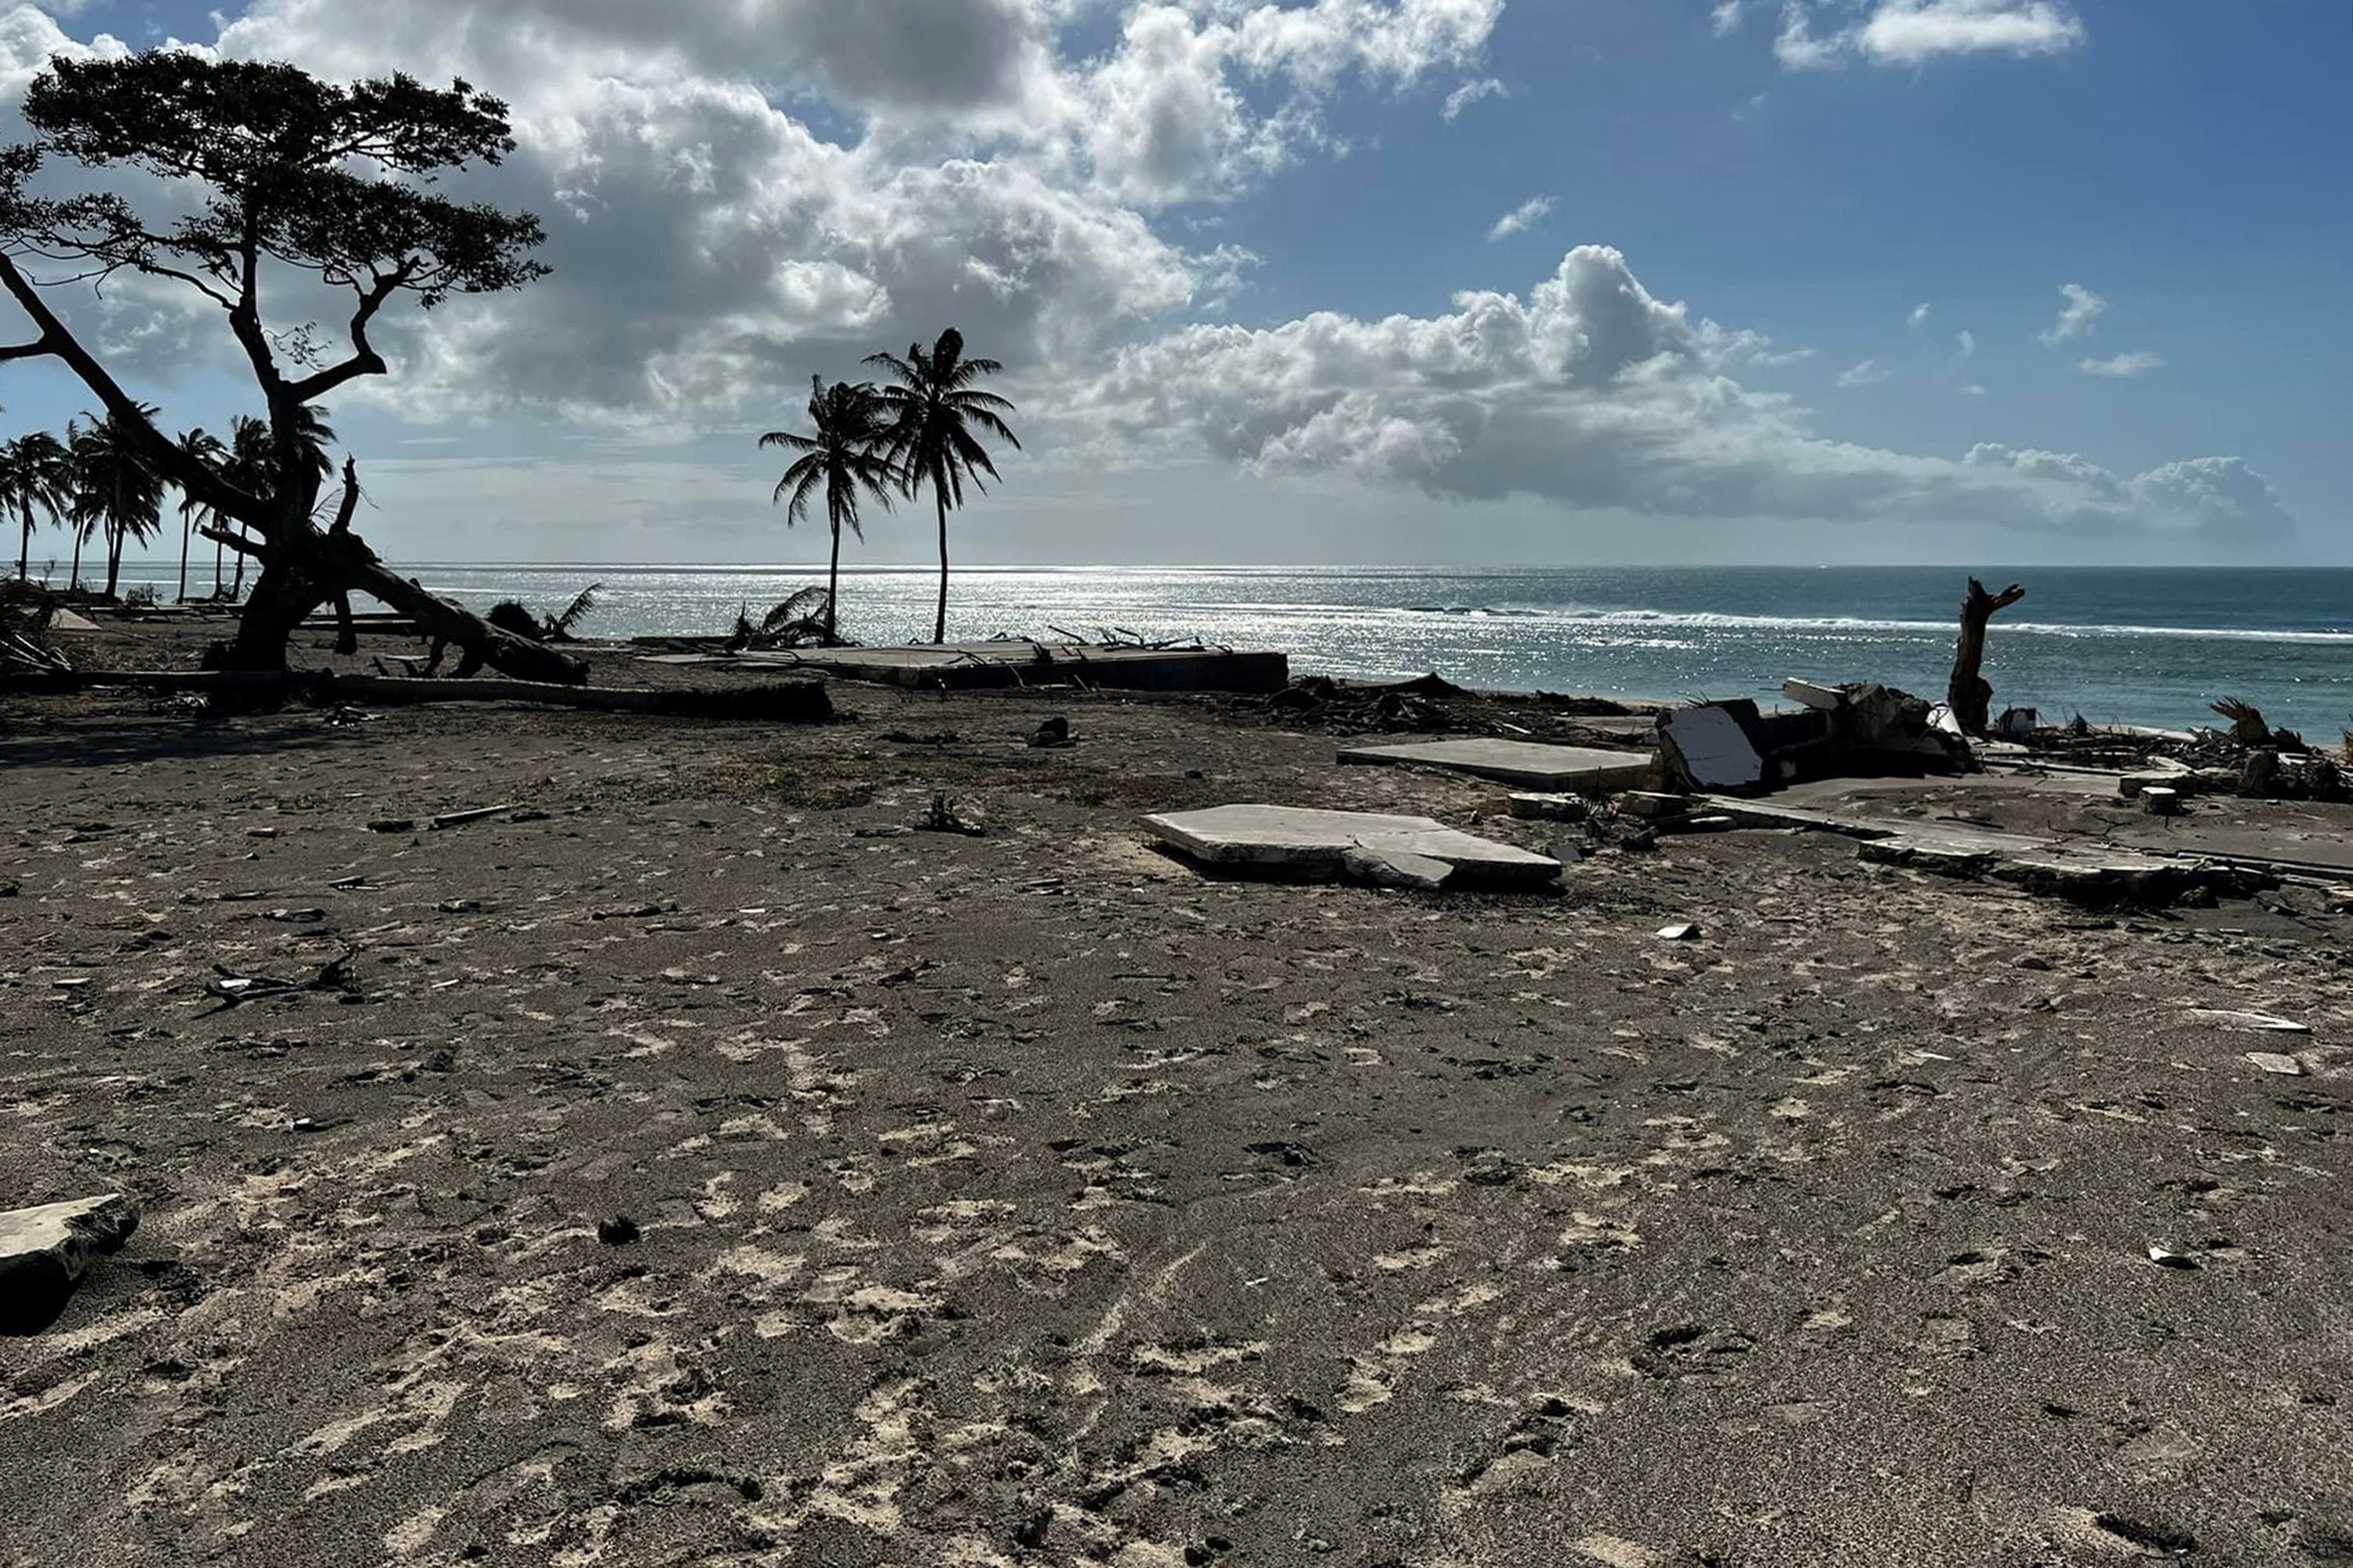 Destruction along the western beaches of Tonga’s main island of Tongatapu following the eruption of the Hunga Tonga-Hunga Haapai undersea volcano